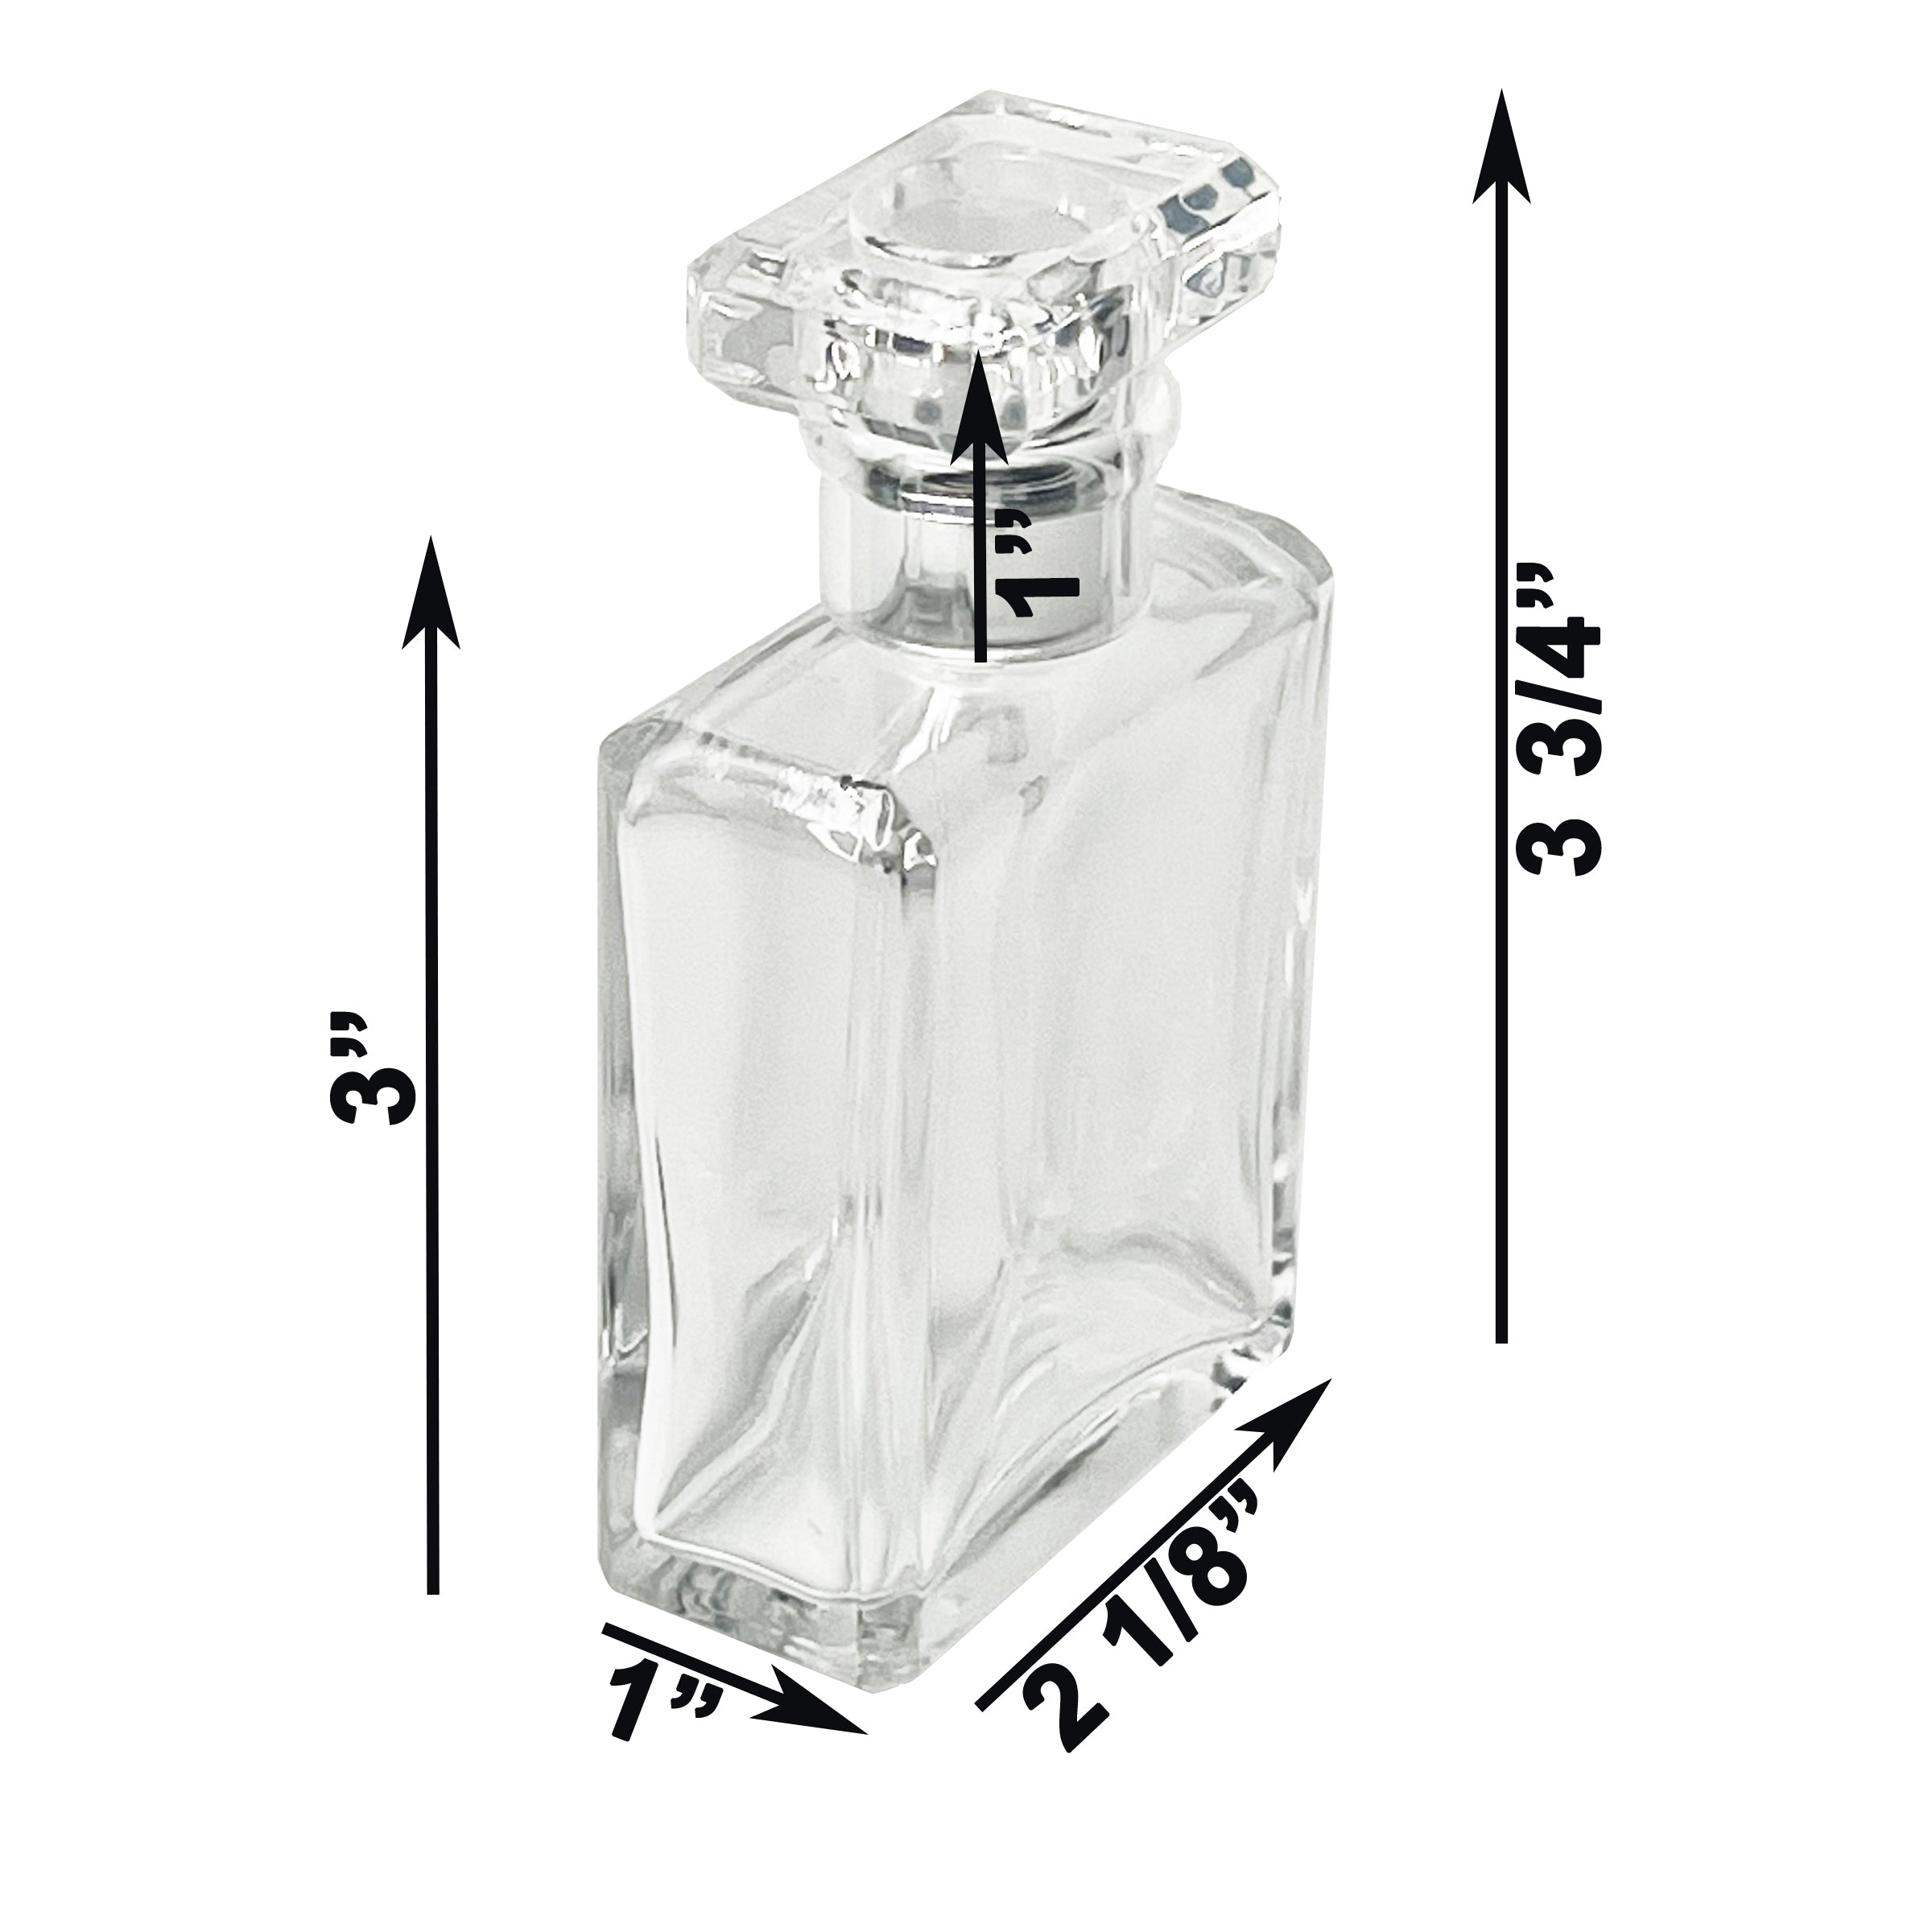 50ml 1.7oz square clear T-cap perfume spray bottles